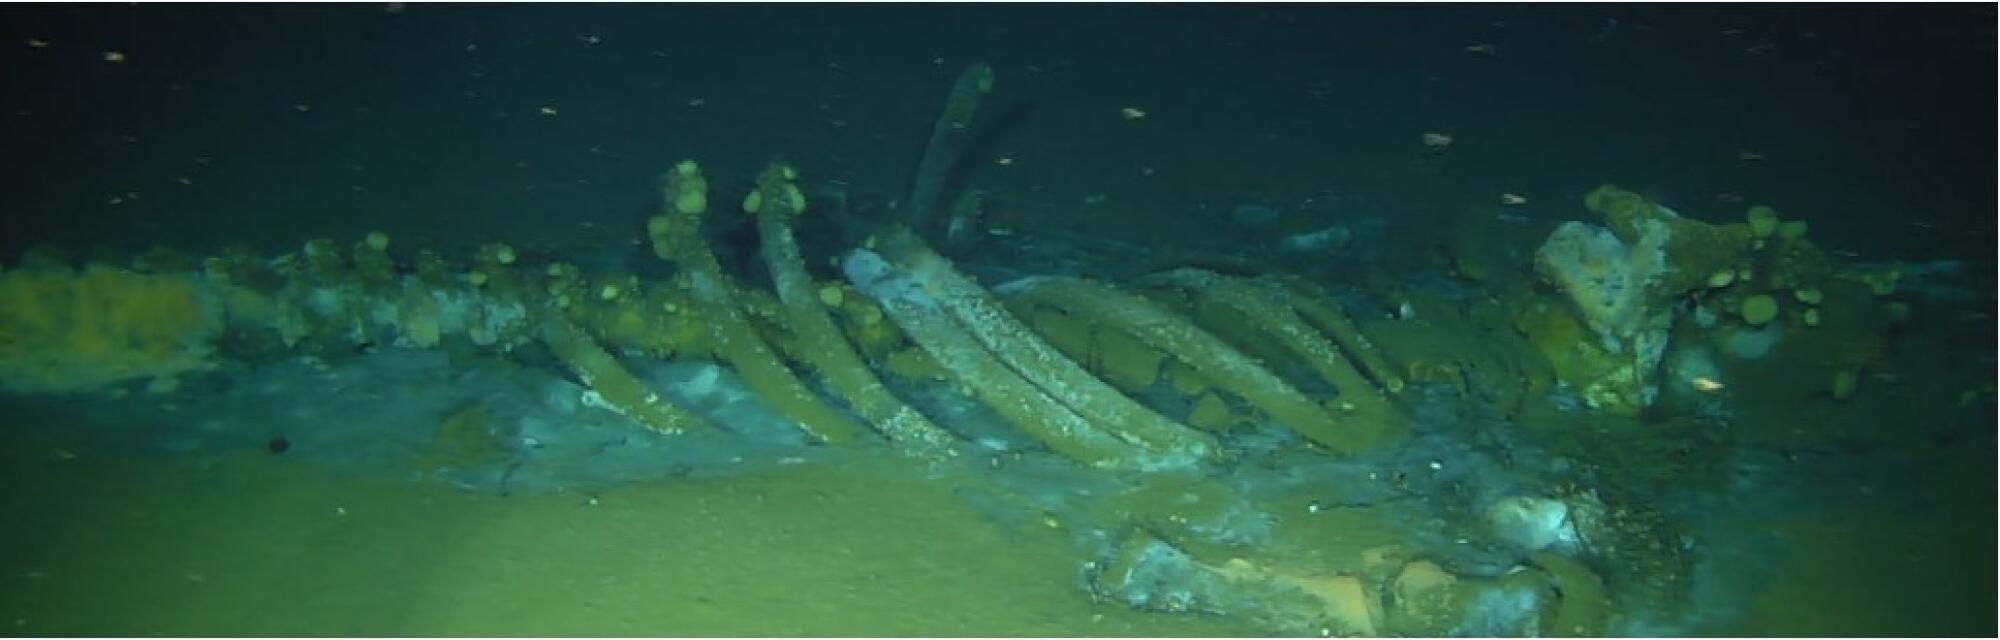 Underwater photo of a sunken whale carcass.